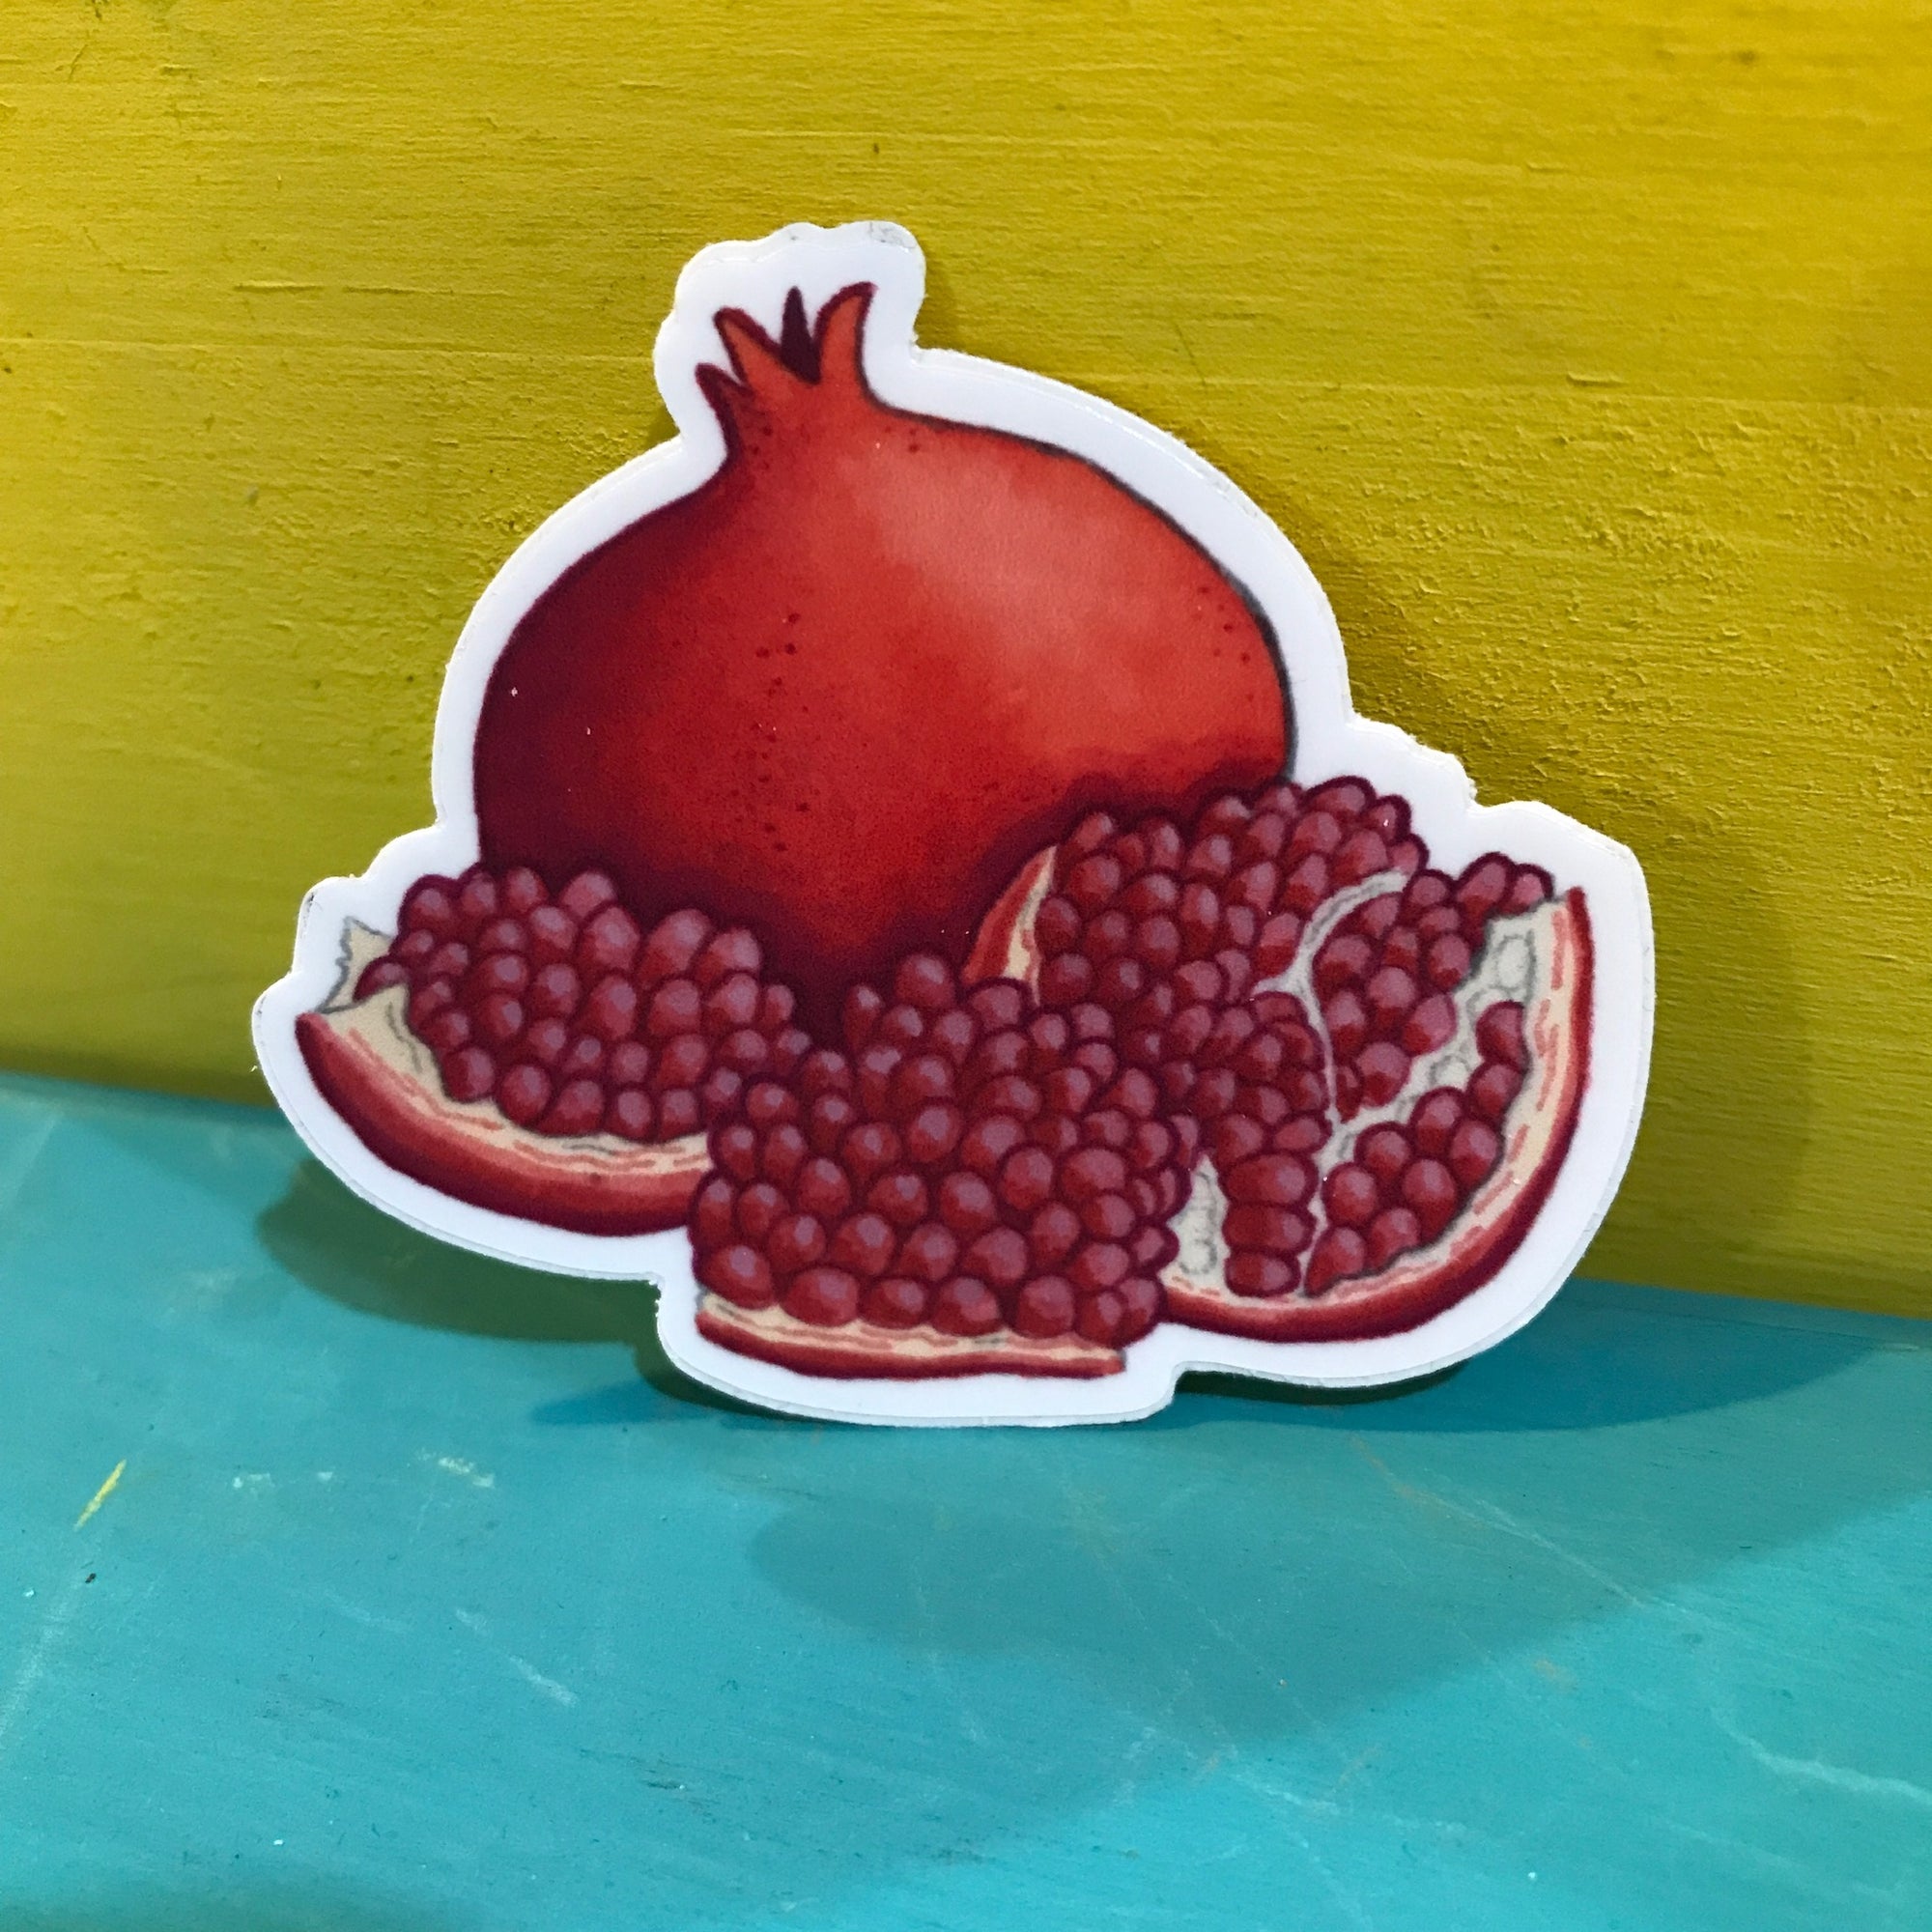 Sticker - Pomegranate